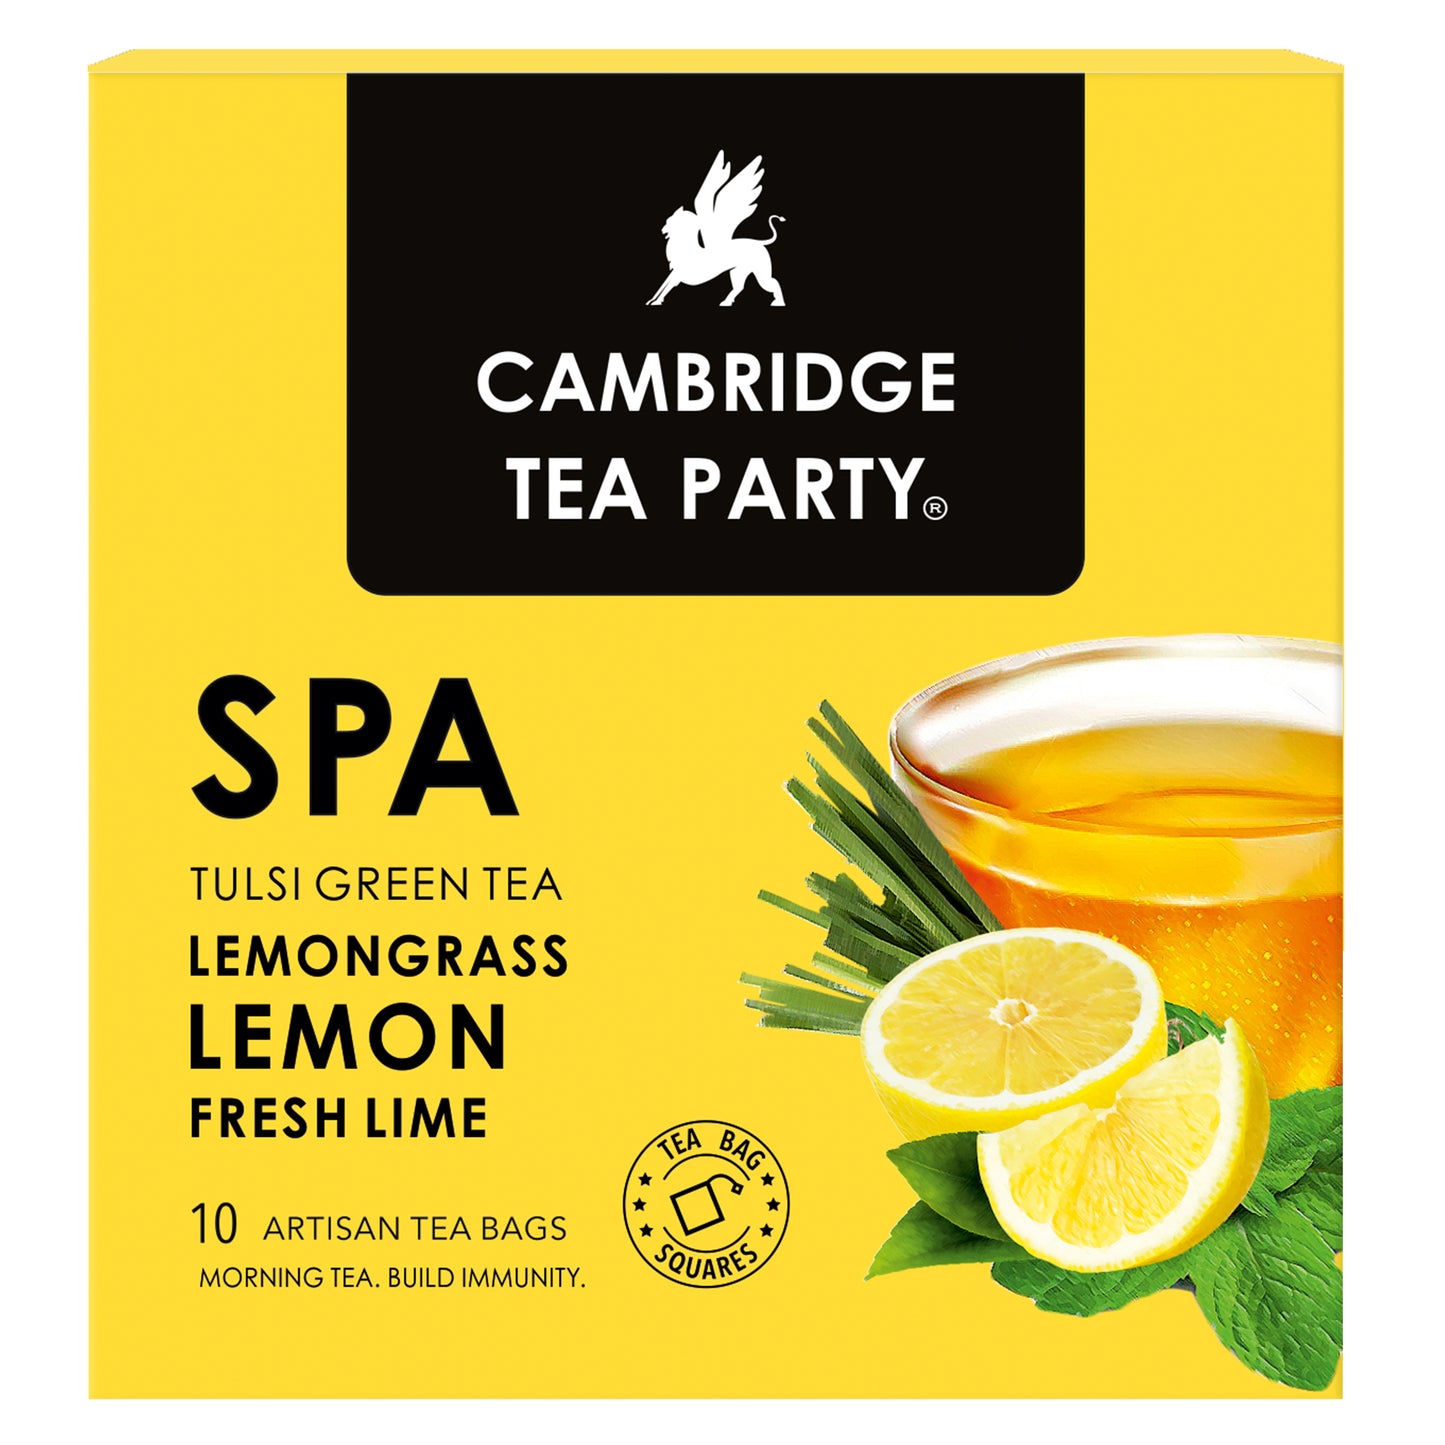 Spa, Lemon Lime Lemongrass Tulsi Green Tea, 10 Tea Bags 